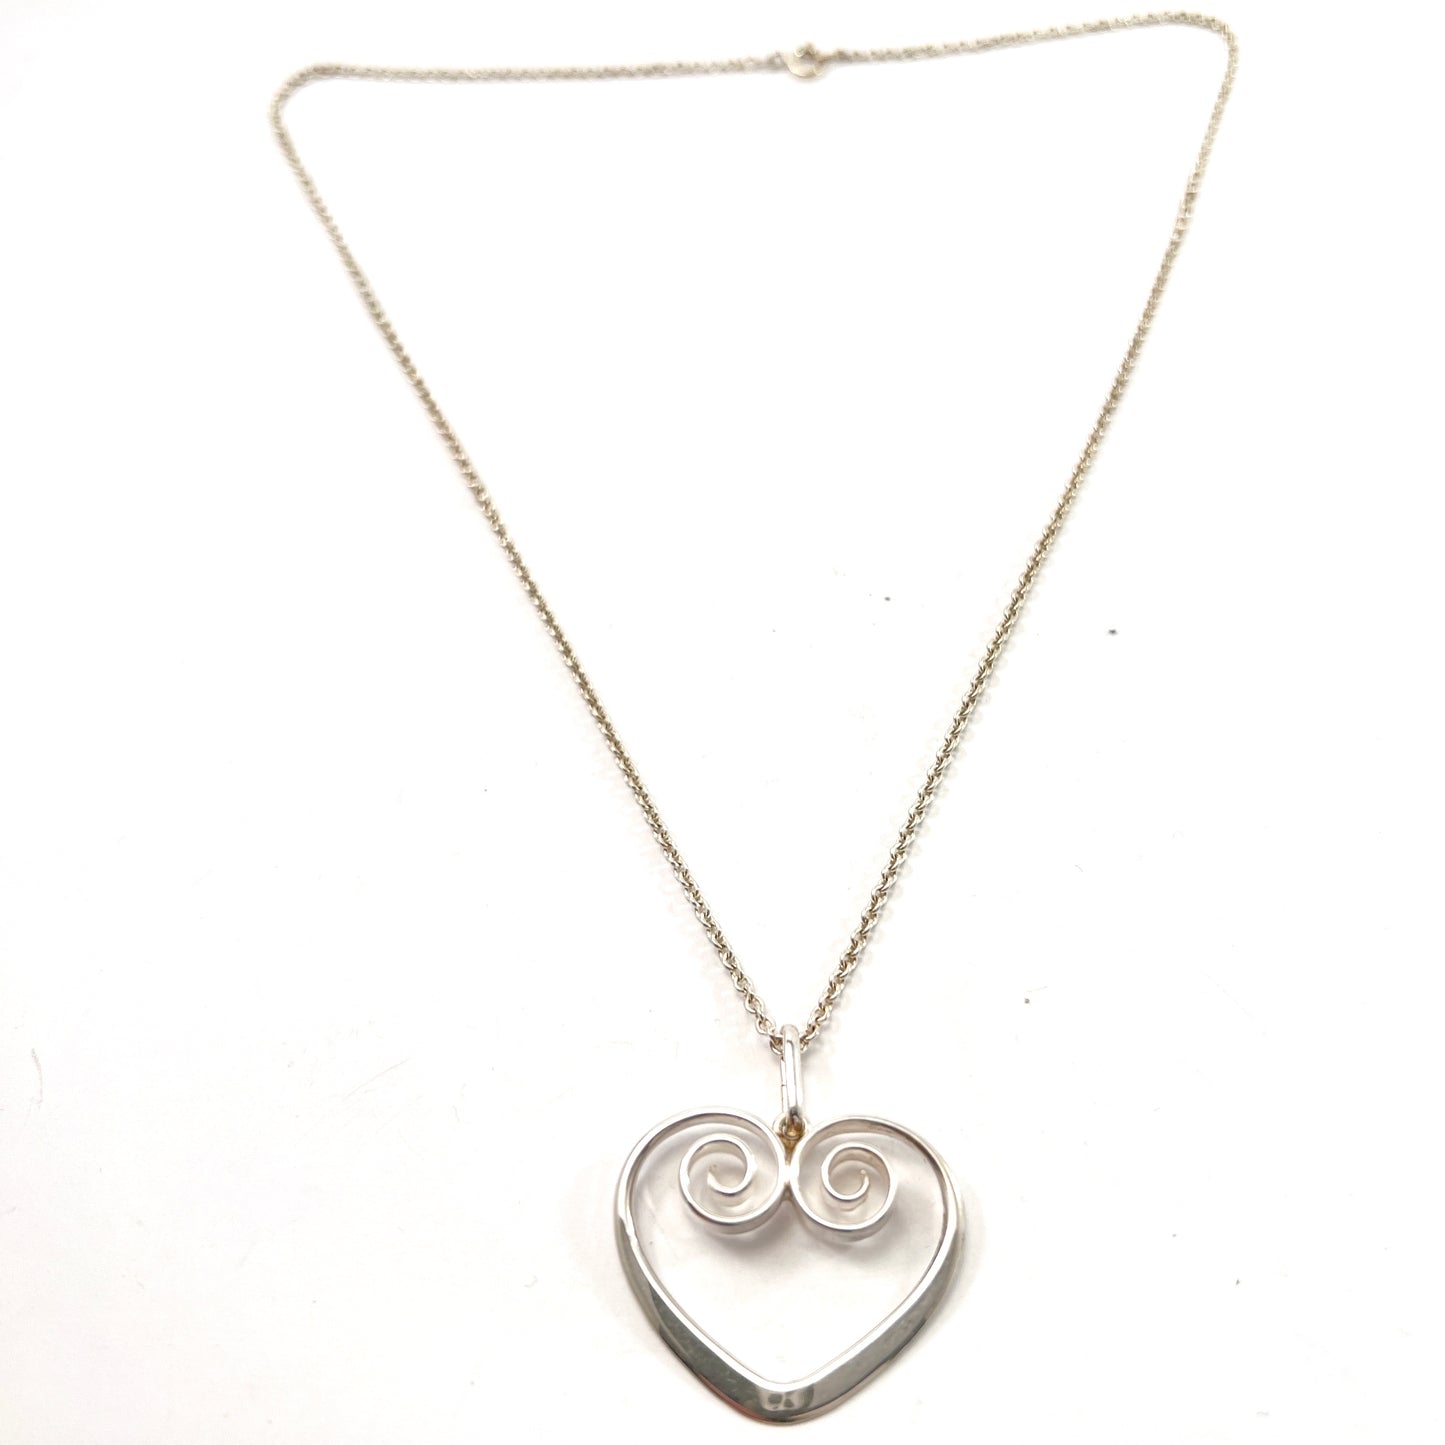 Norway. Vintage Solid Silver Heart Pendant Necklace.